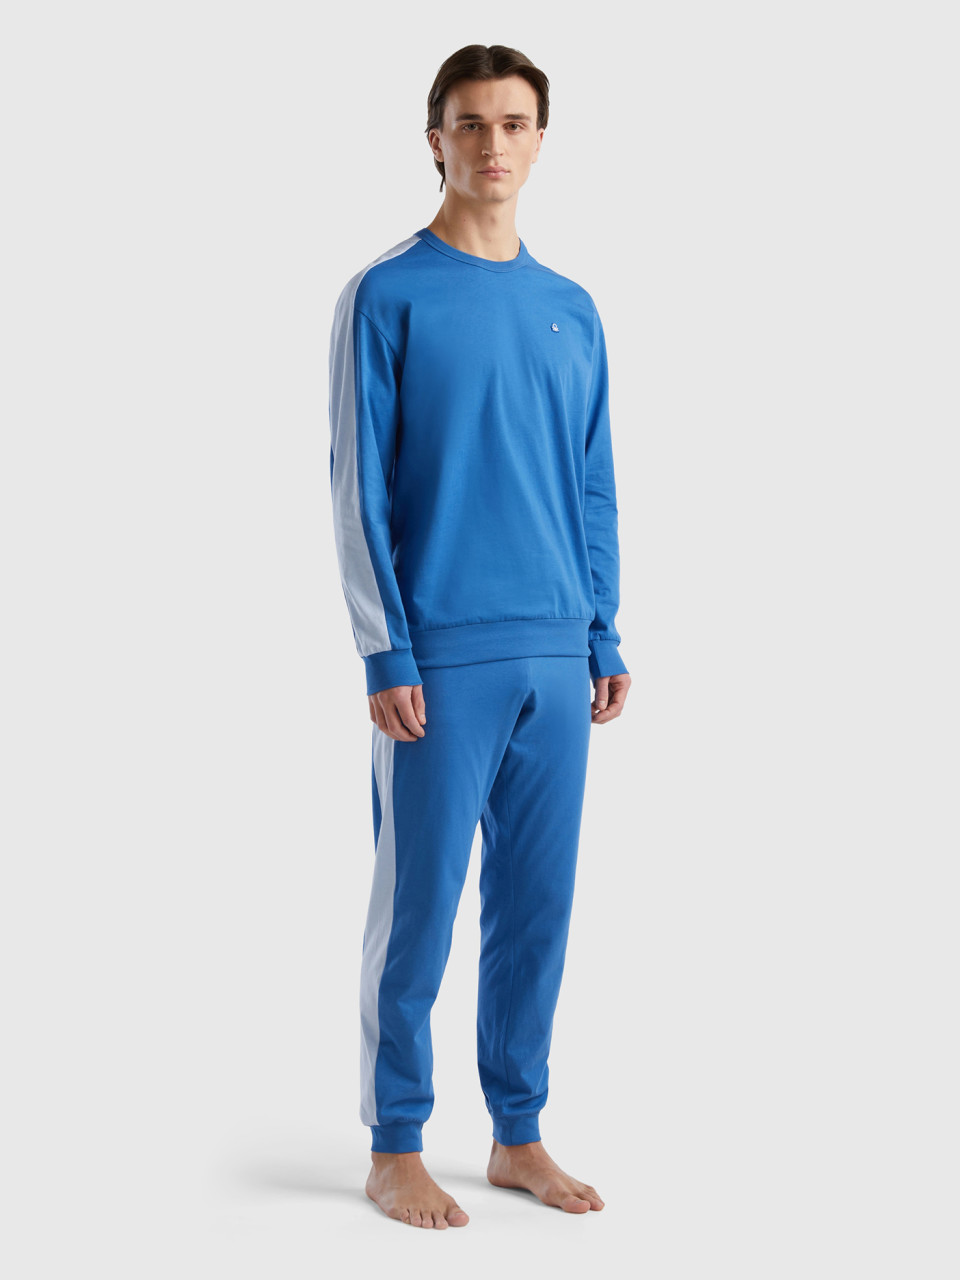 Benetton, Pyjamas With Side Stripes, Blue, Men